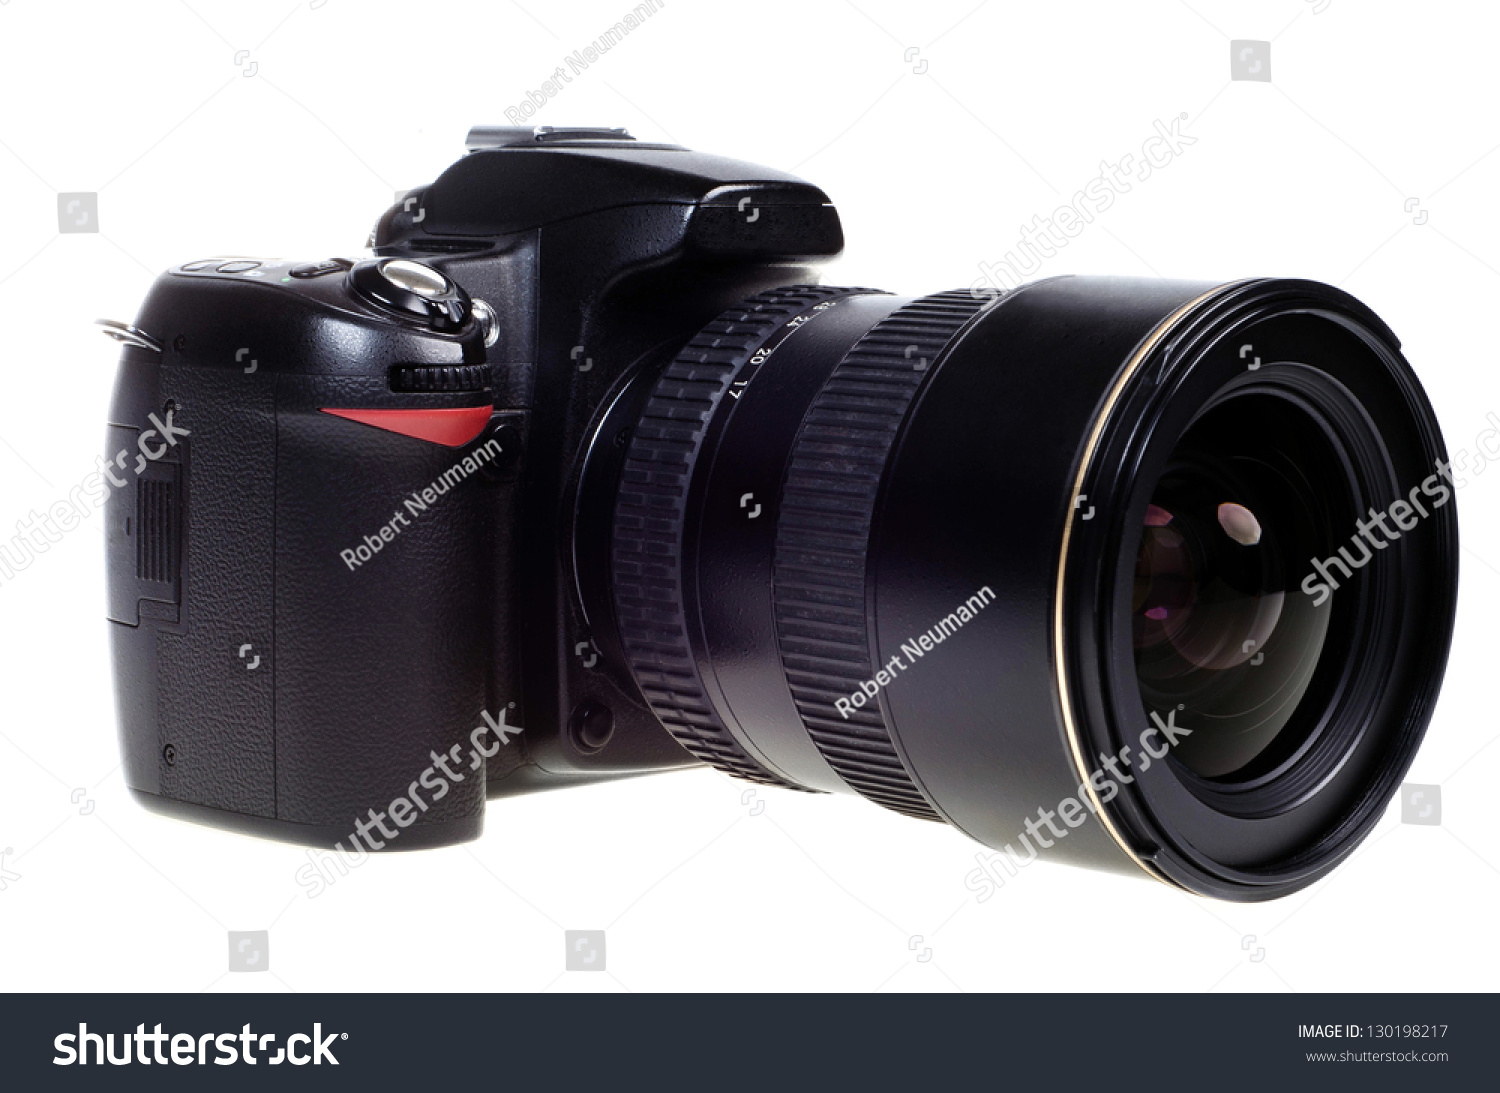 digital single lens reflex camera with zoom lense isolated on white background #130198217